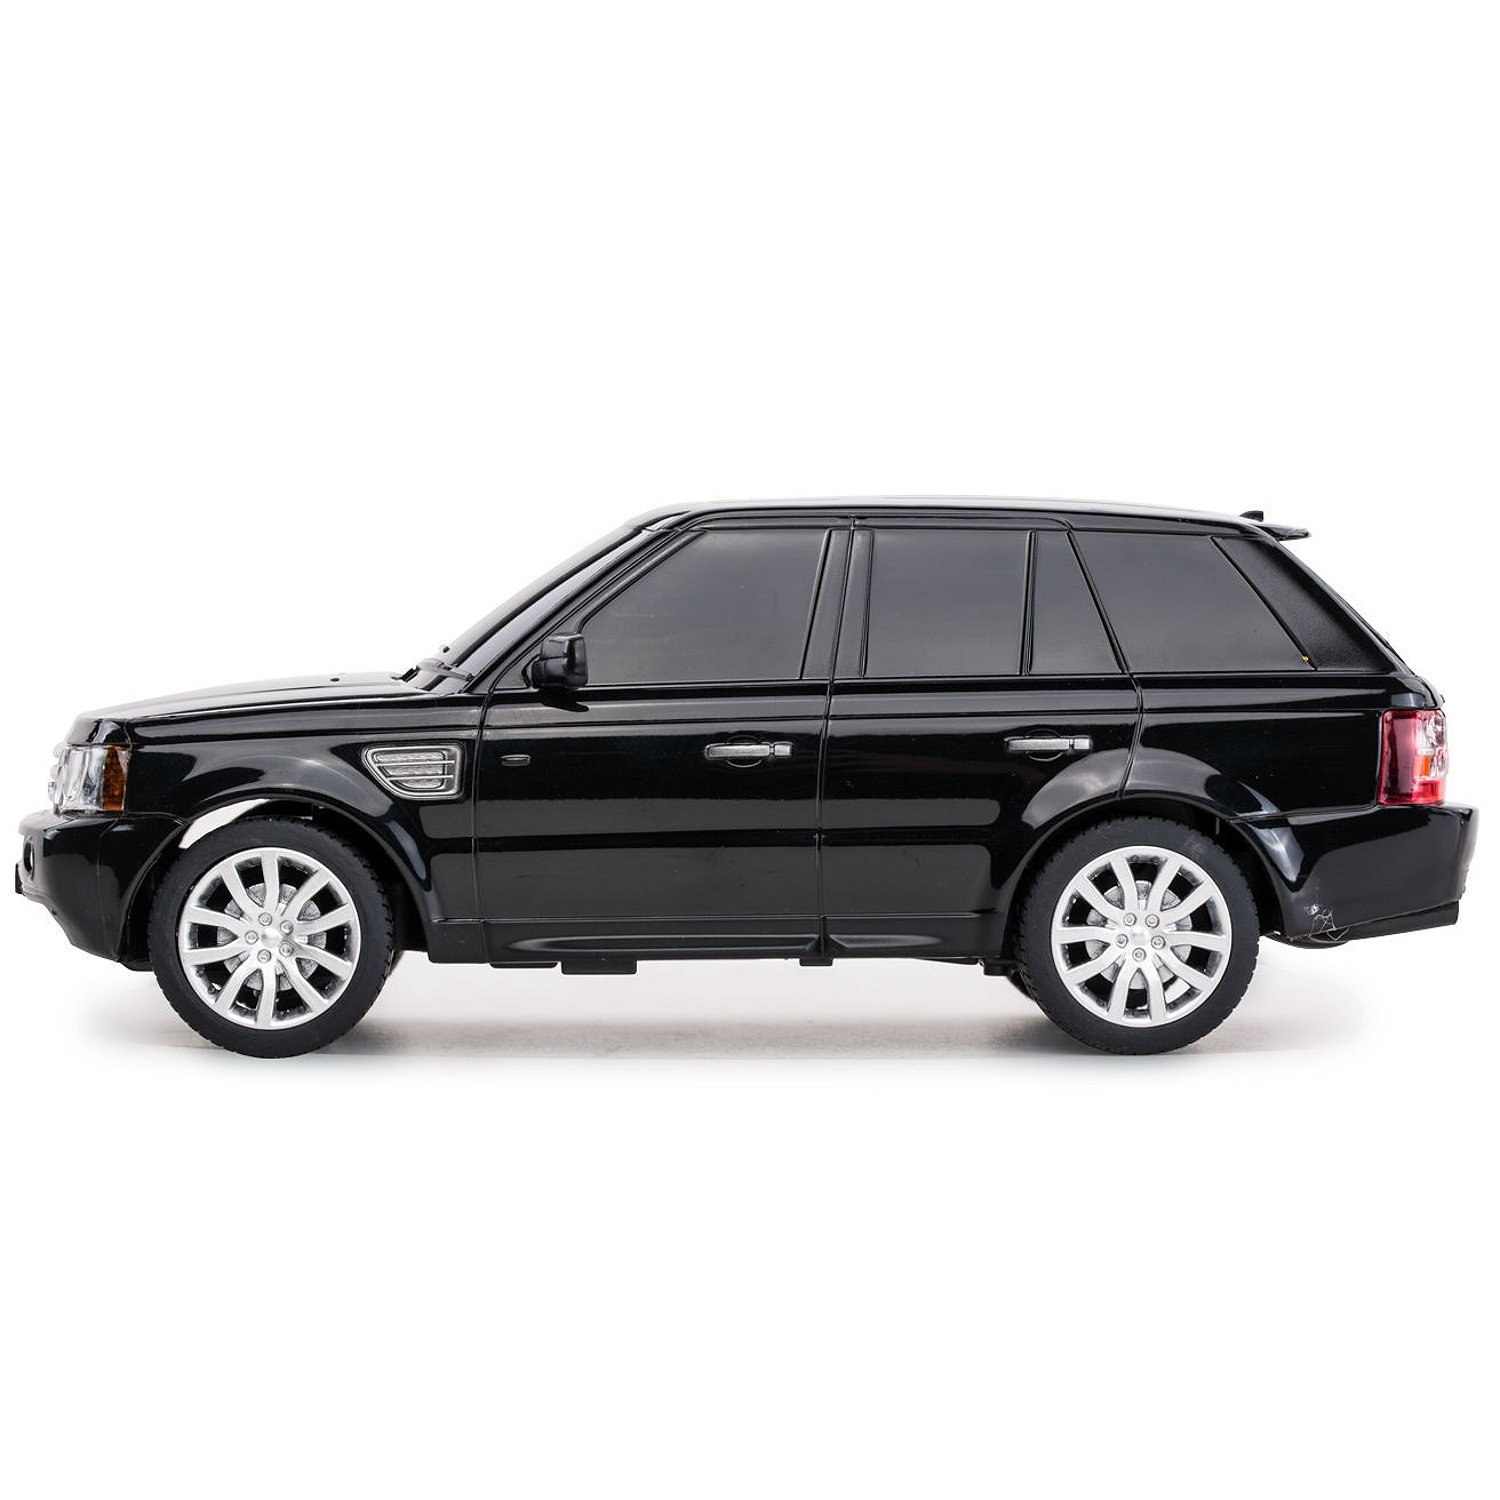 Машинка р/у Rastar Range Rover Sport 1:24 черная 30300